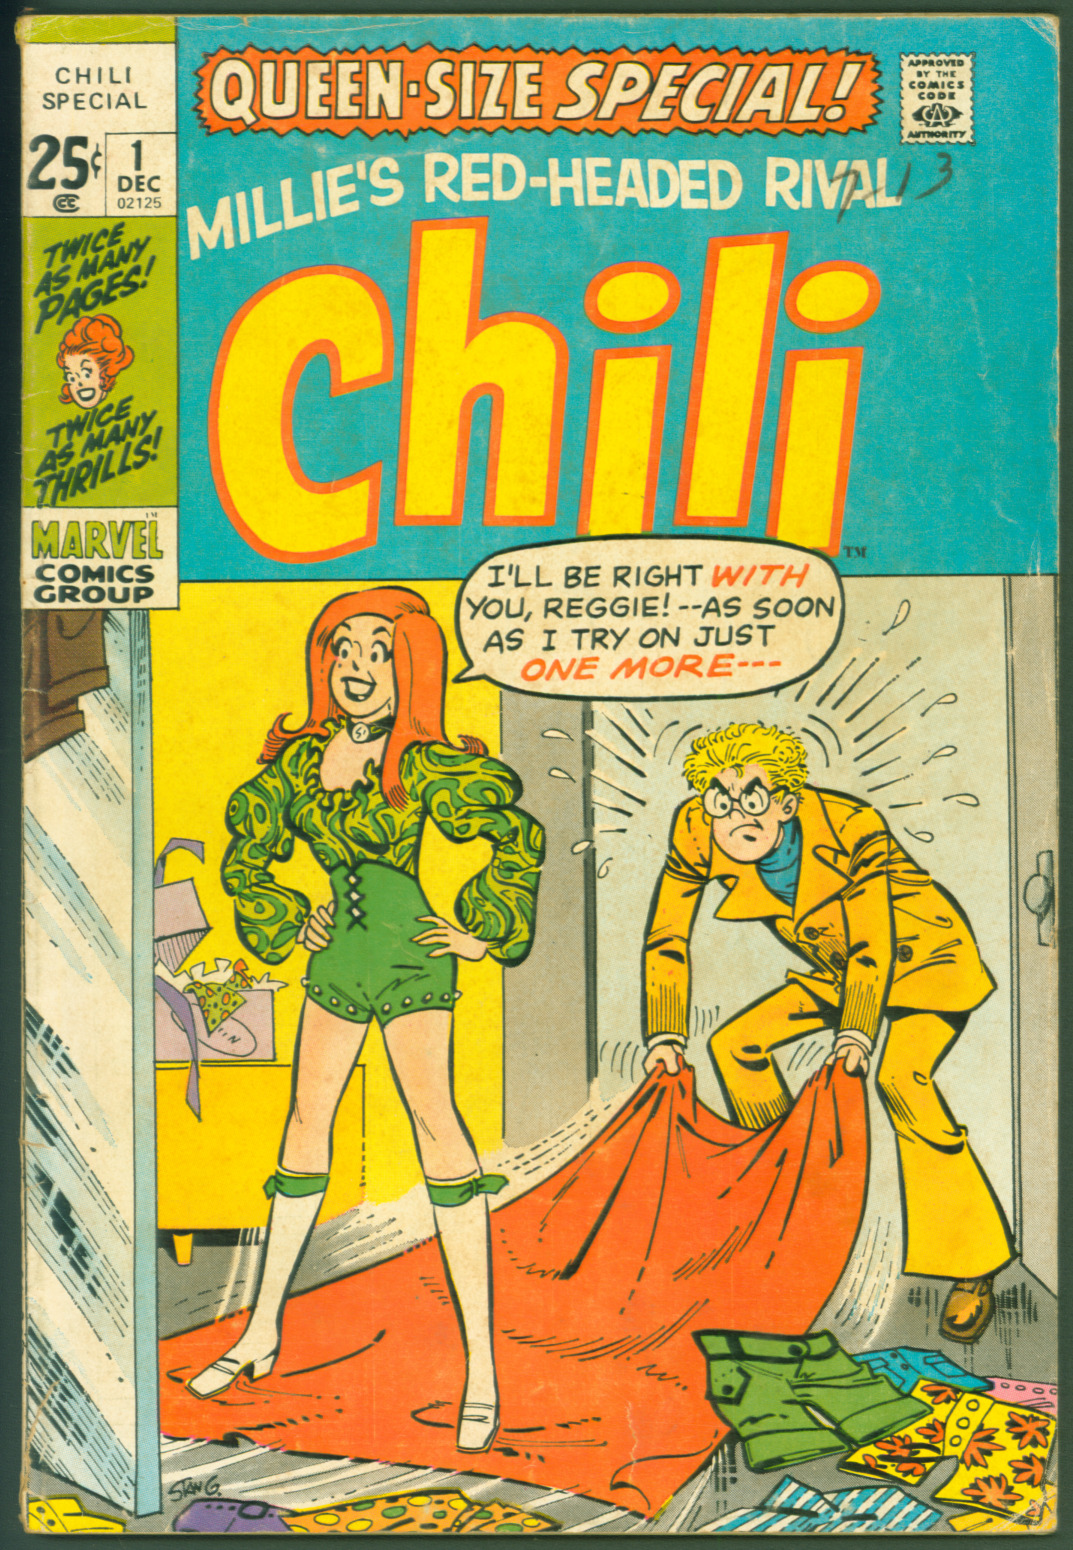 VTG 1971 Bronze Age Marvel Comics Chili Special #1 G/VG  Fashion Cover